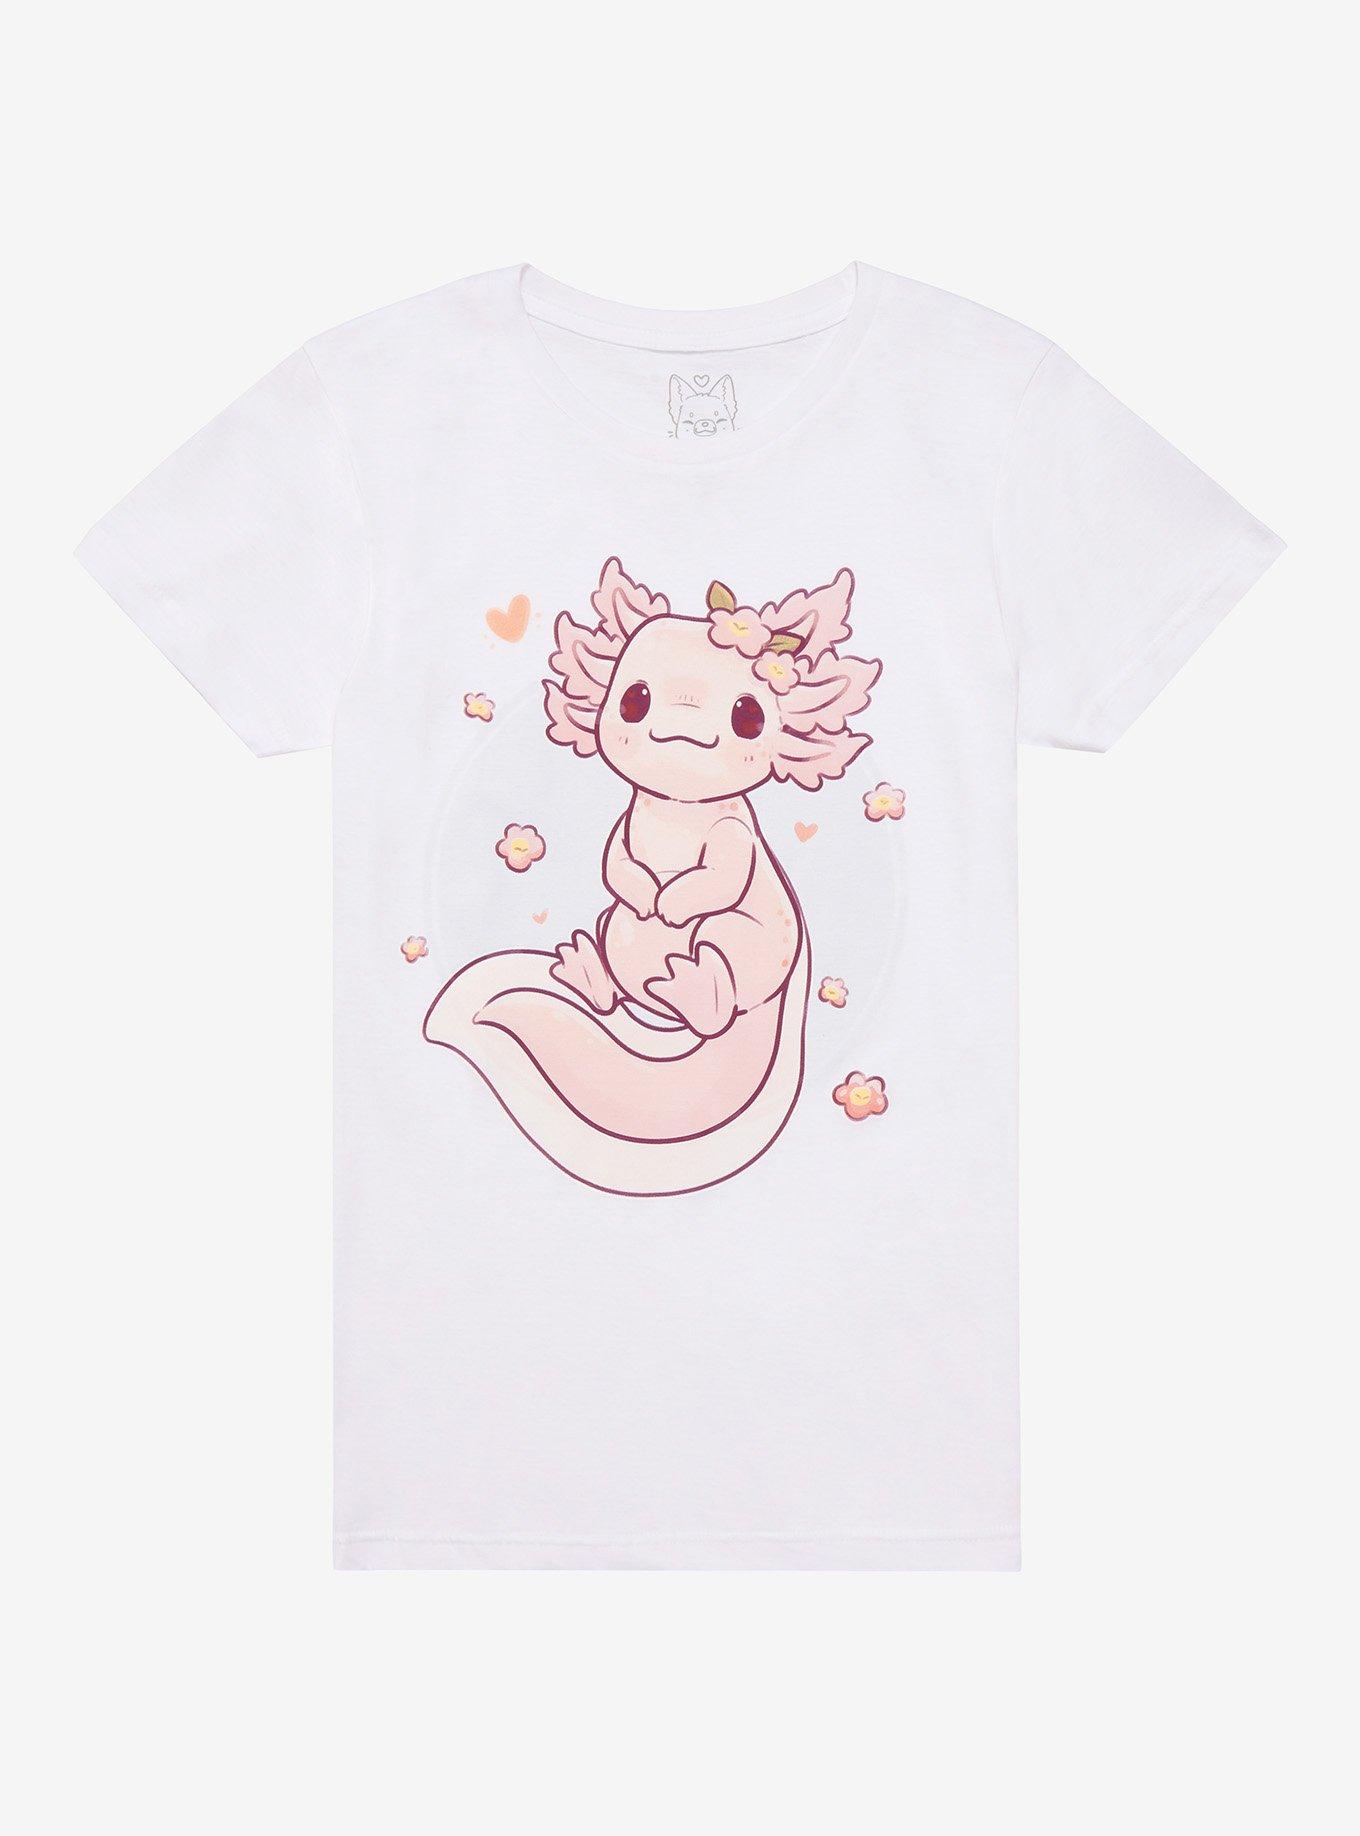 Sakura Axolotl Boyfriend Fit Girls T-Shirt By Naomi Lord Art, MULTI, hi-res